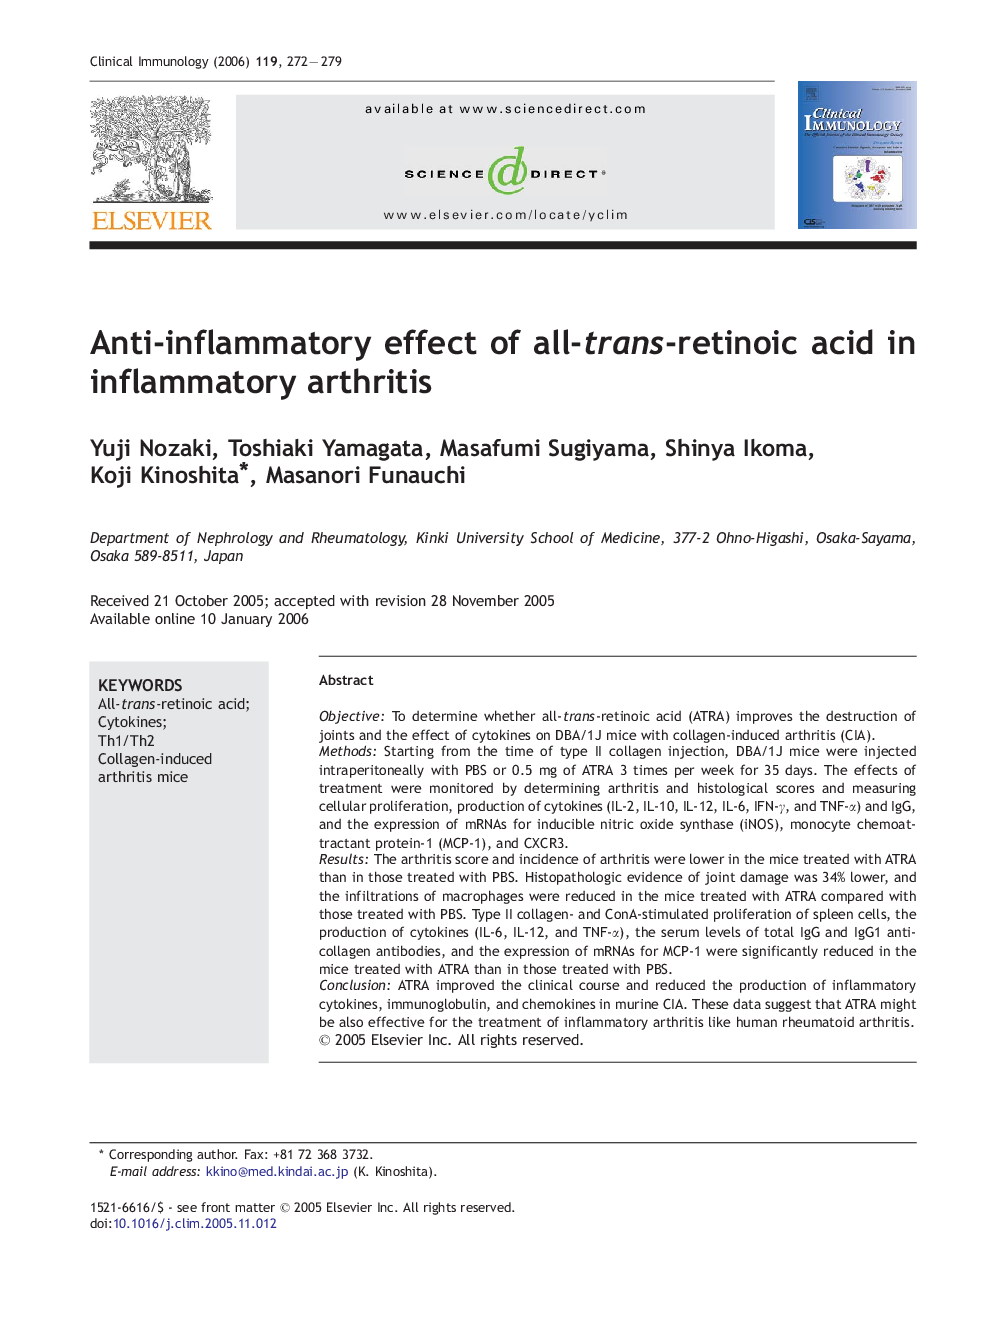 Anti-inflammatory effect of all-trans-retinoic acid in inflammatory arthritis